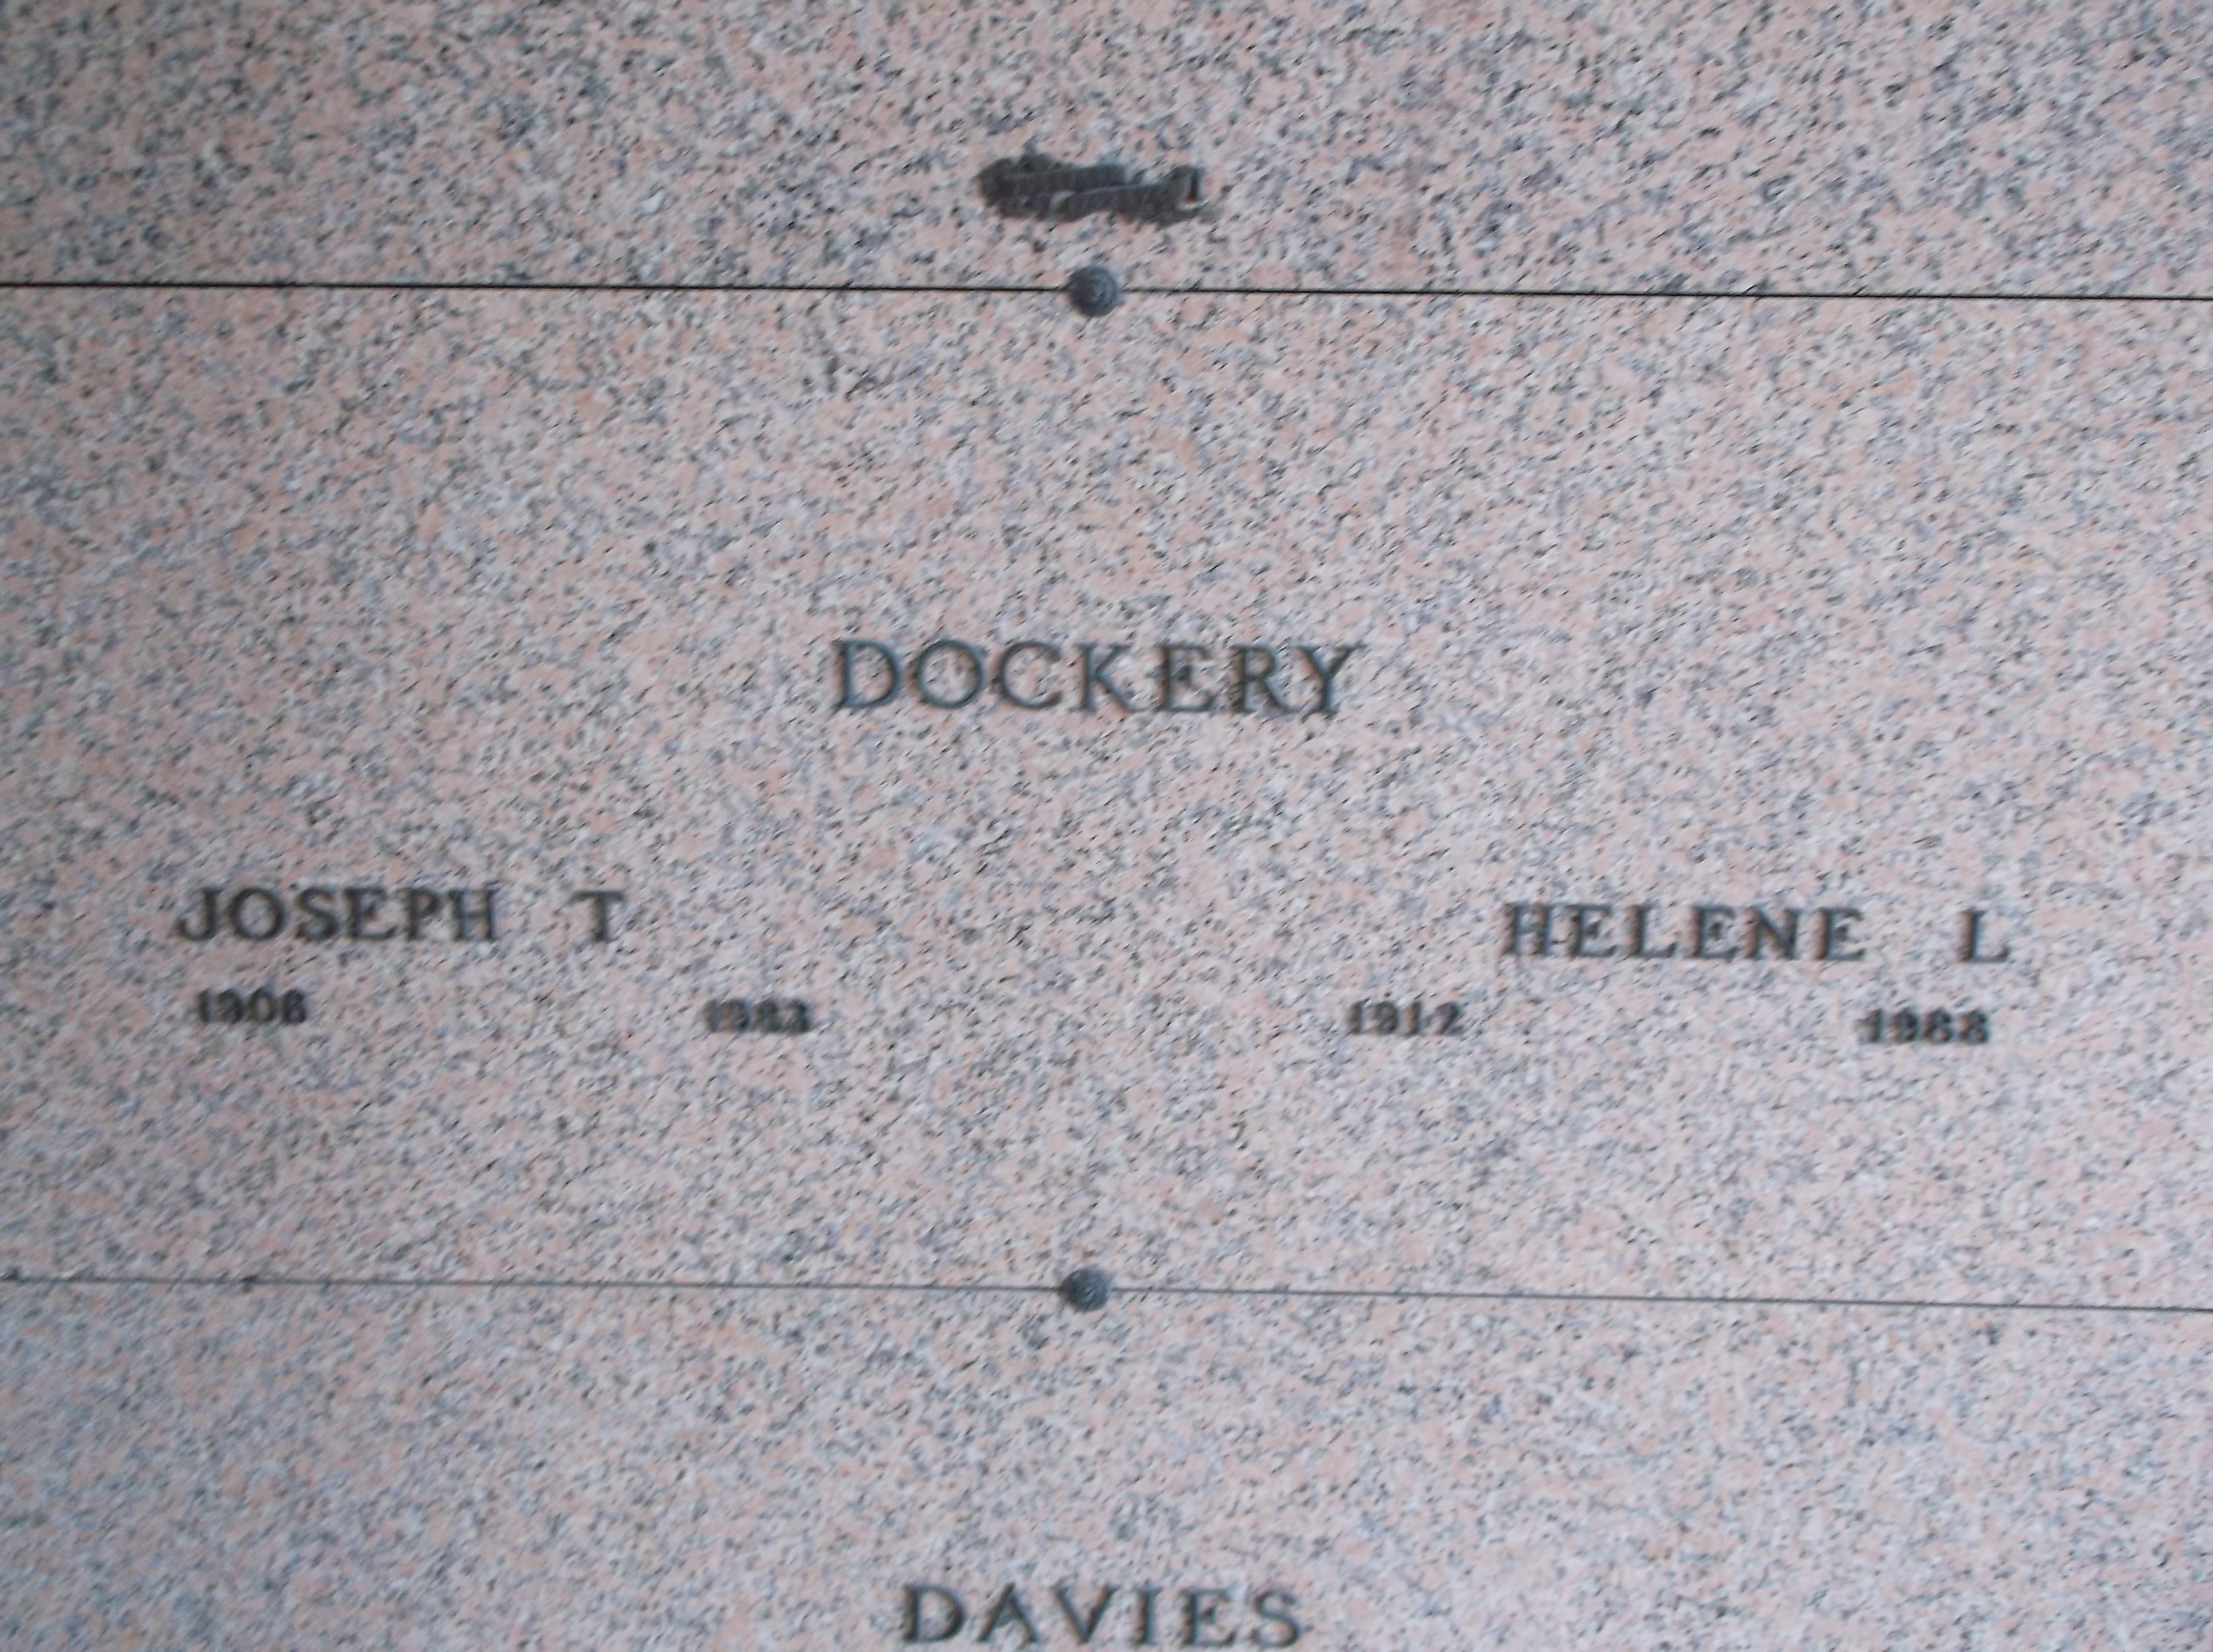 Joseph T Dockery